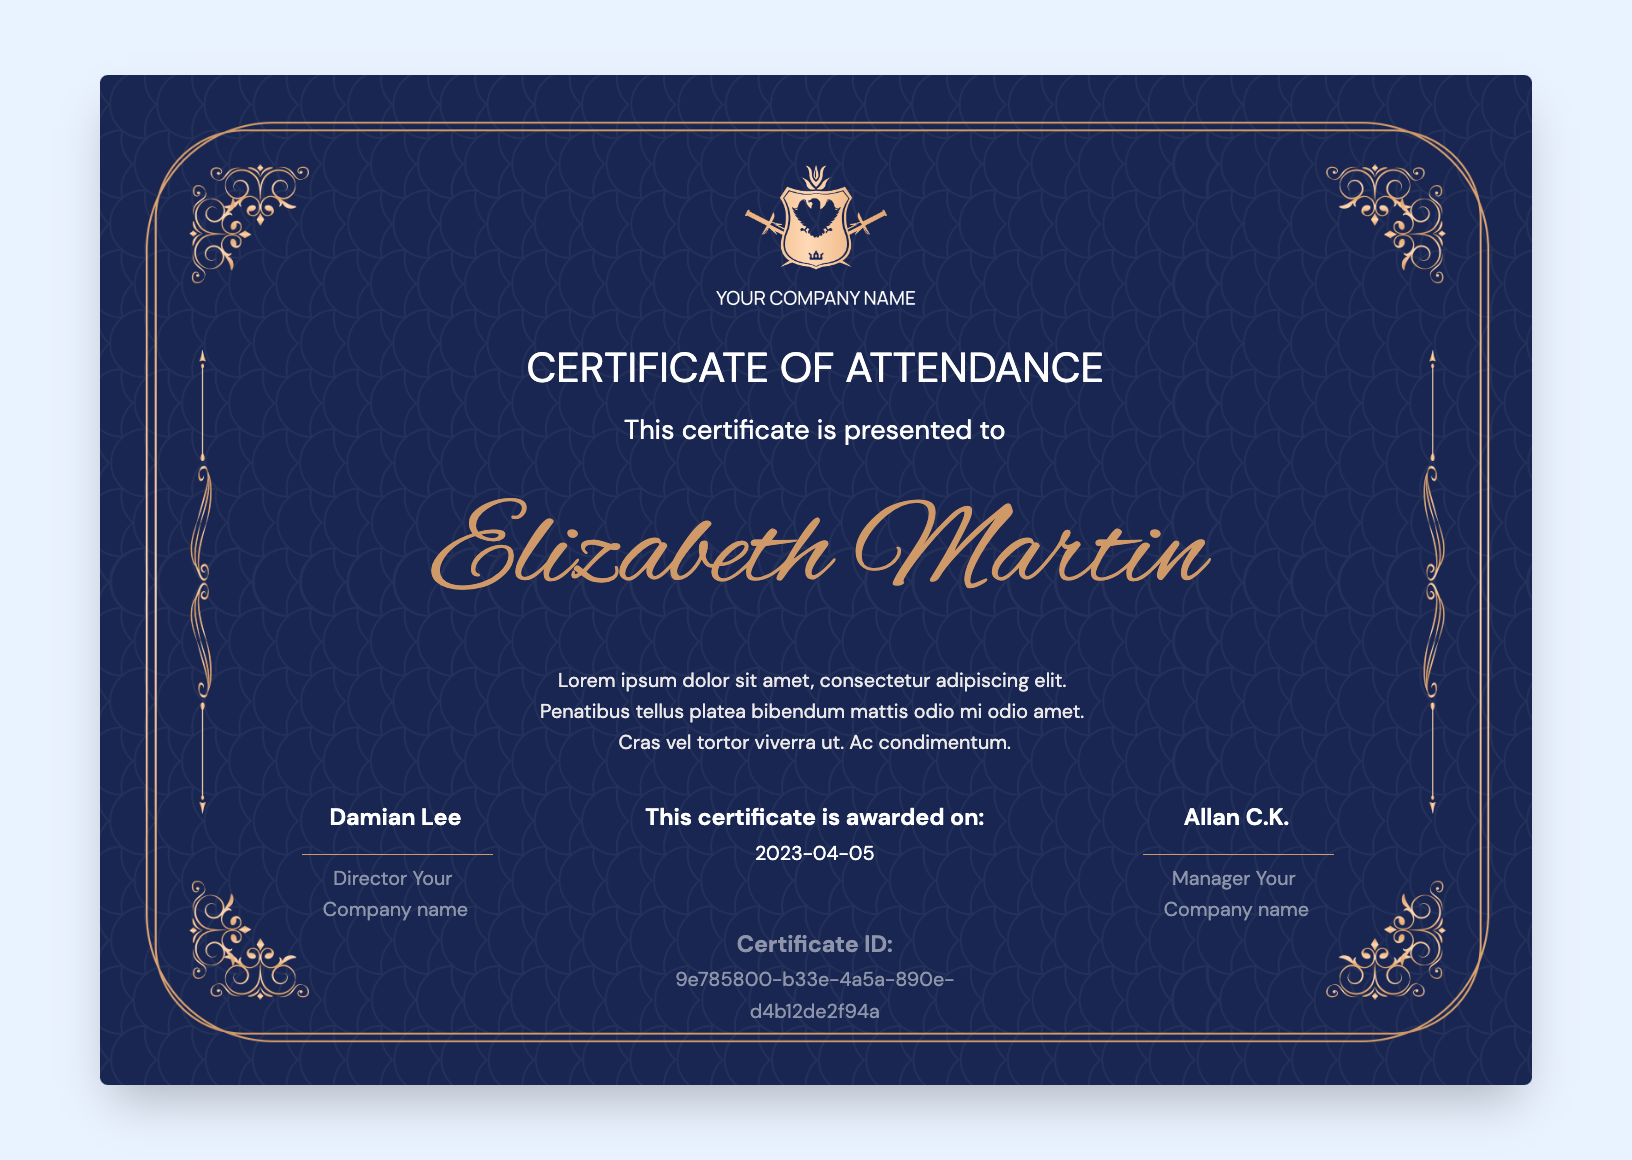 Stylish dark blue certificate of attendance template.